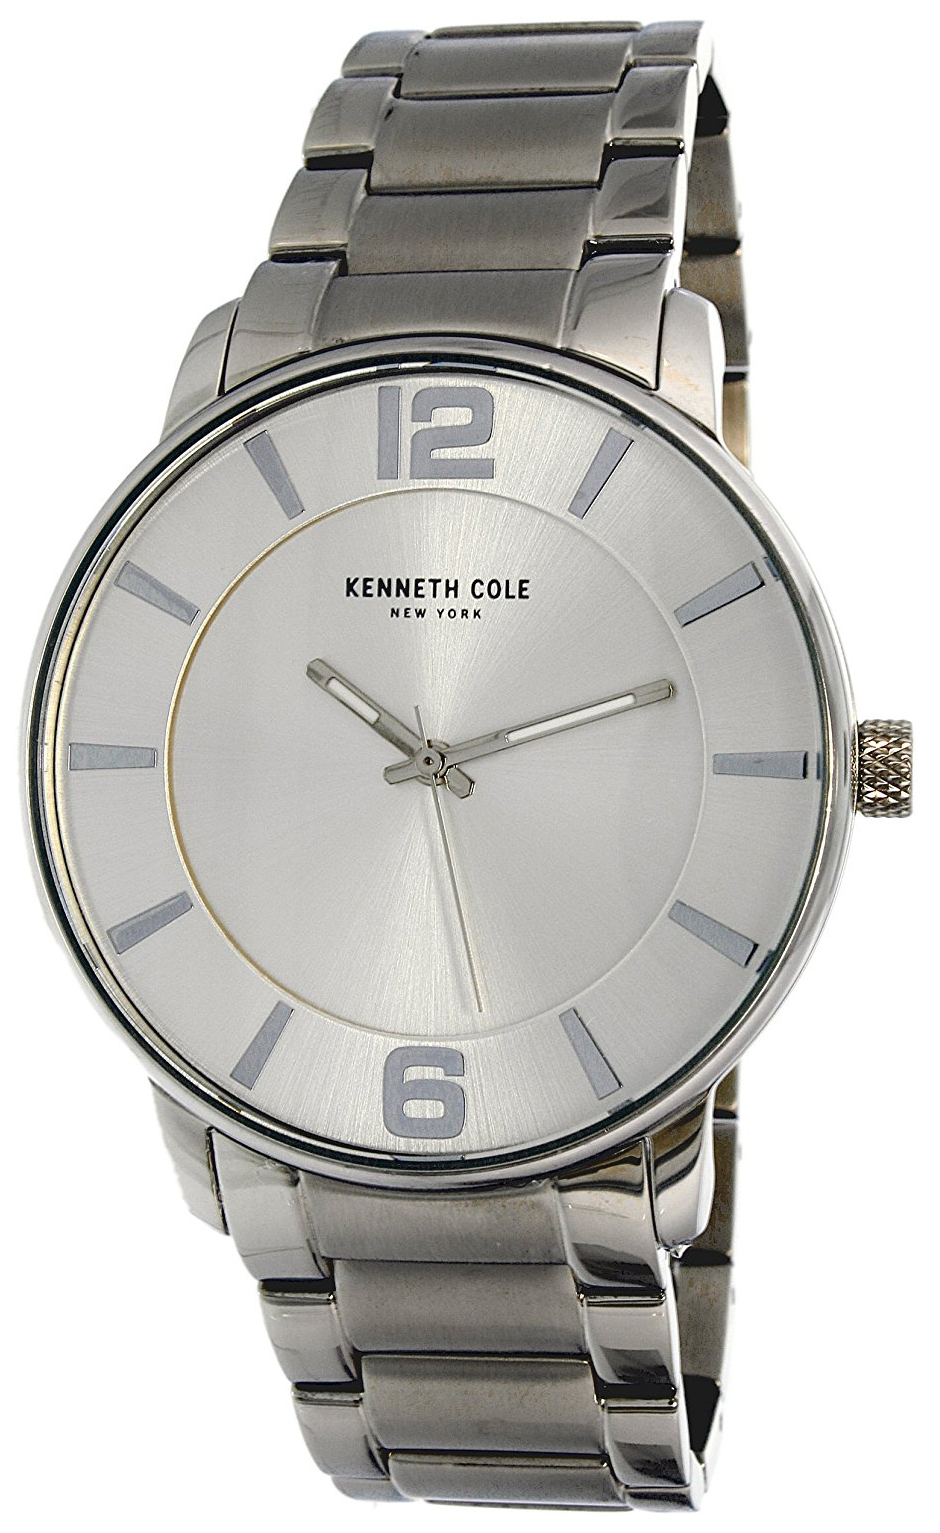 Kenneth Cole Classic Herrklocka 10031716 Silverfärgad/Stål Ø42 mm